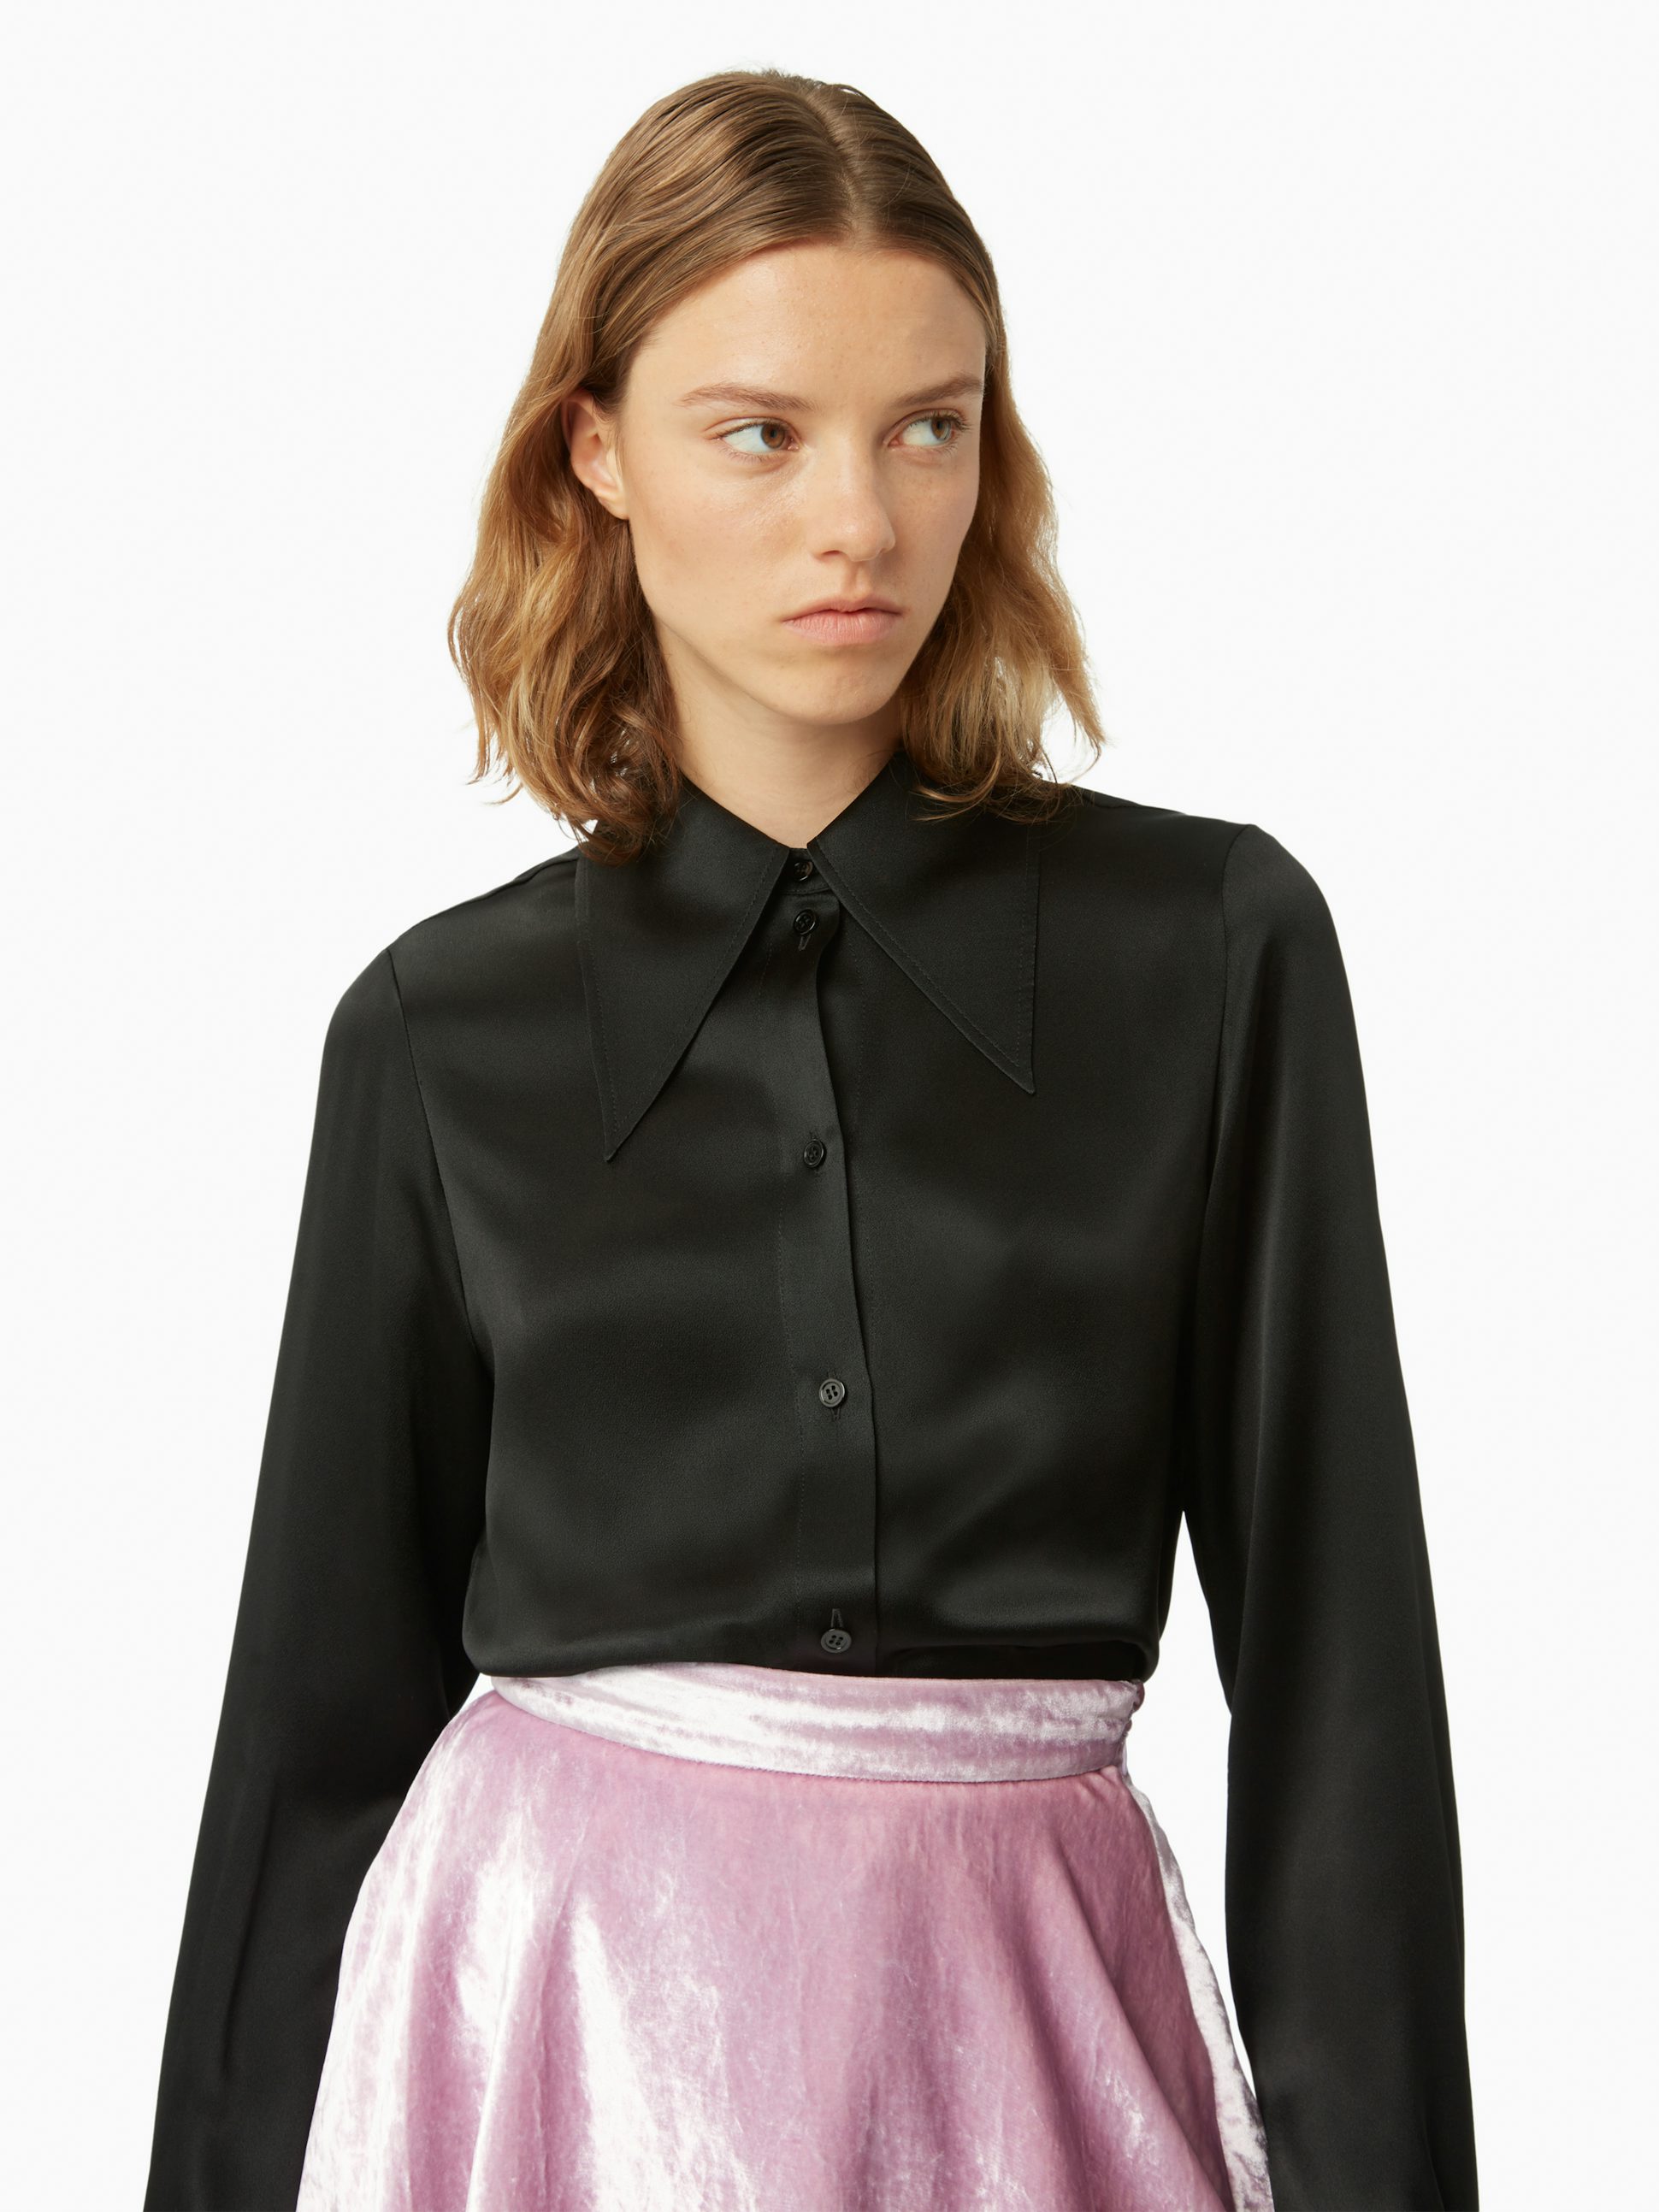 Bell cuff shirt in black - Nina Ricci